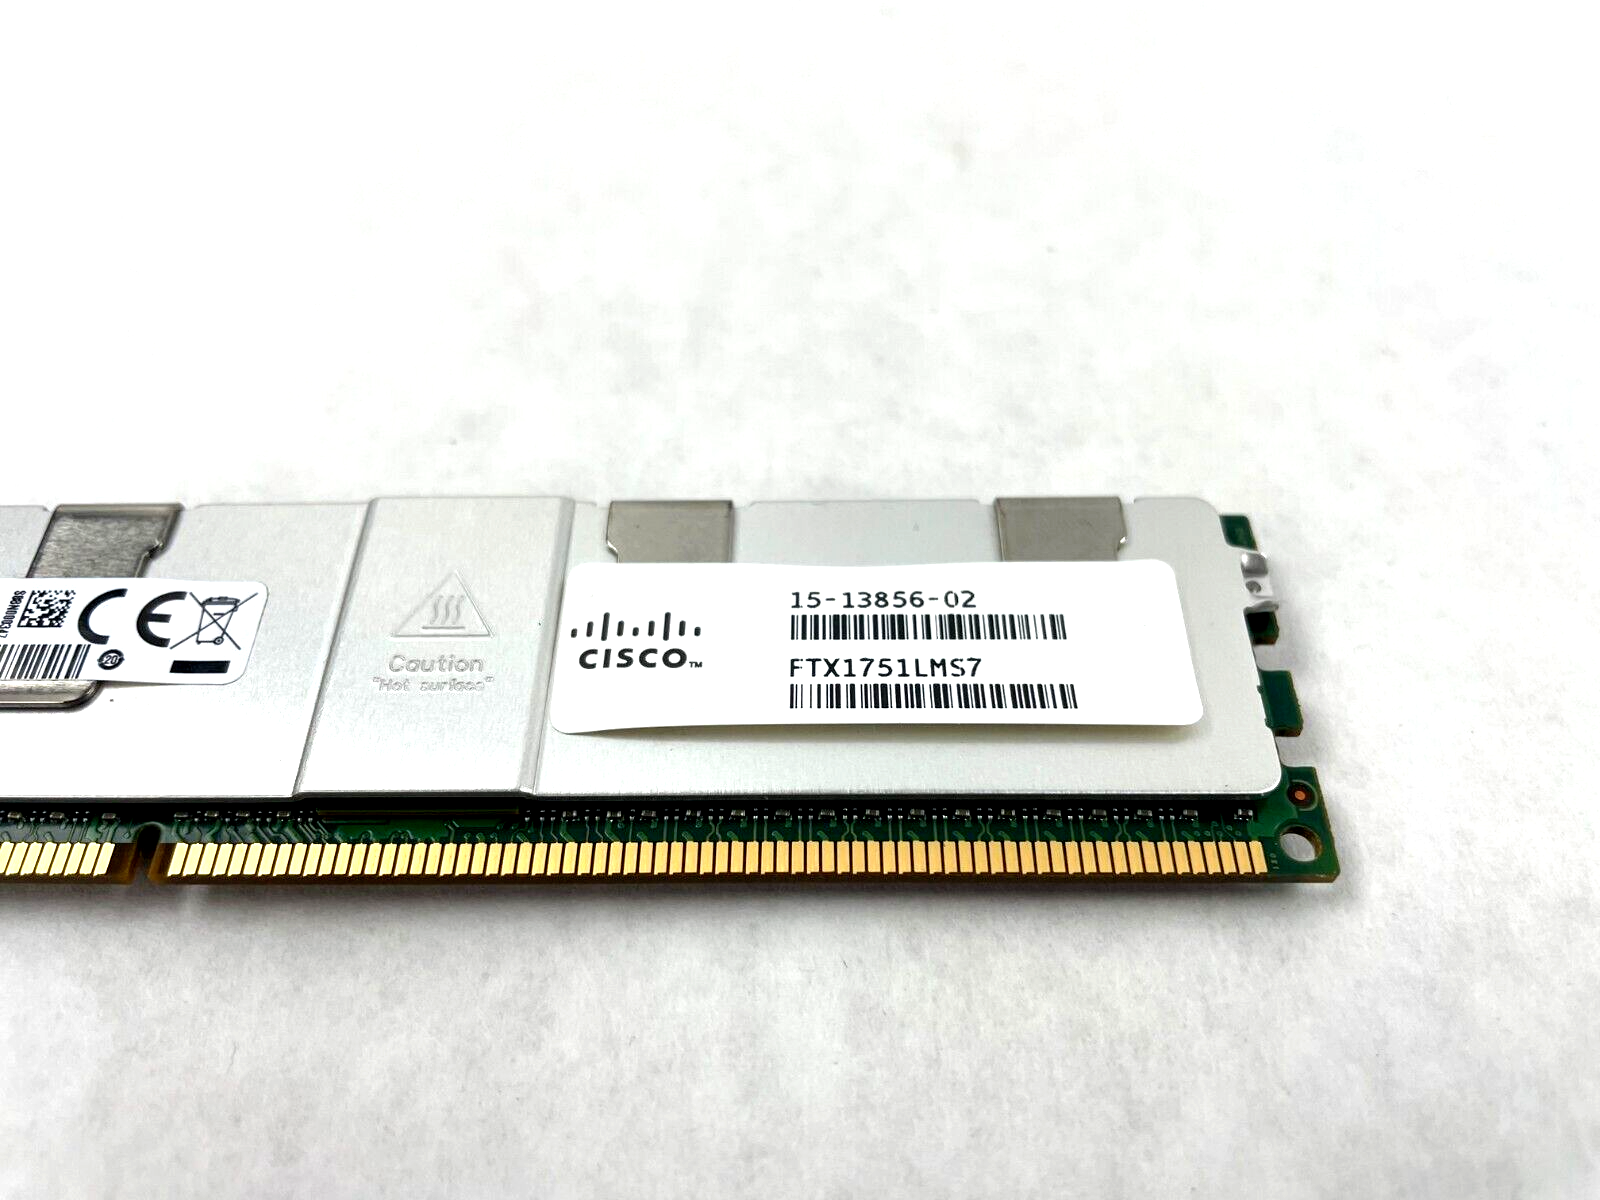 Samsung M386B4G70BM0-YK00 32GB Server RAM Memory, DDR3L, Cisco 15-13856-02